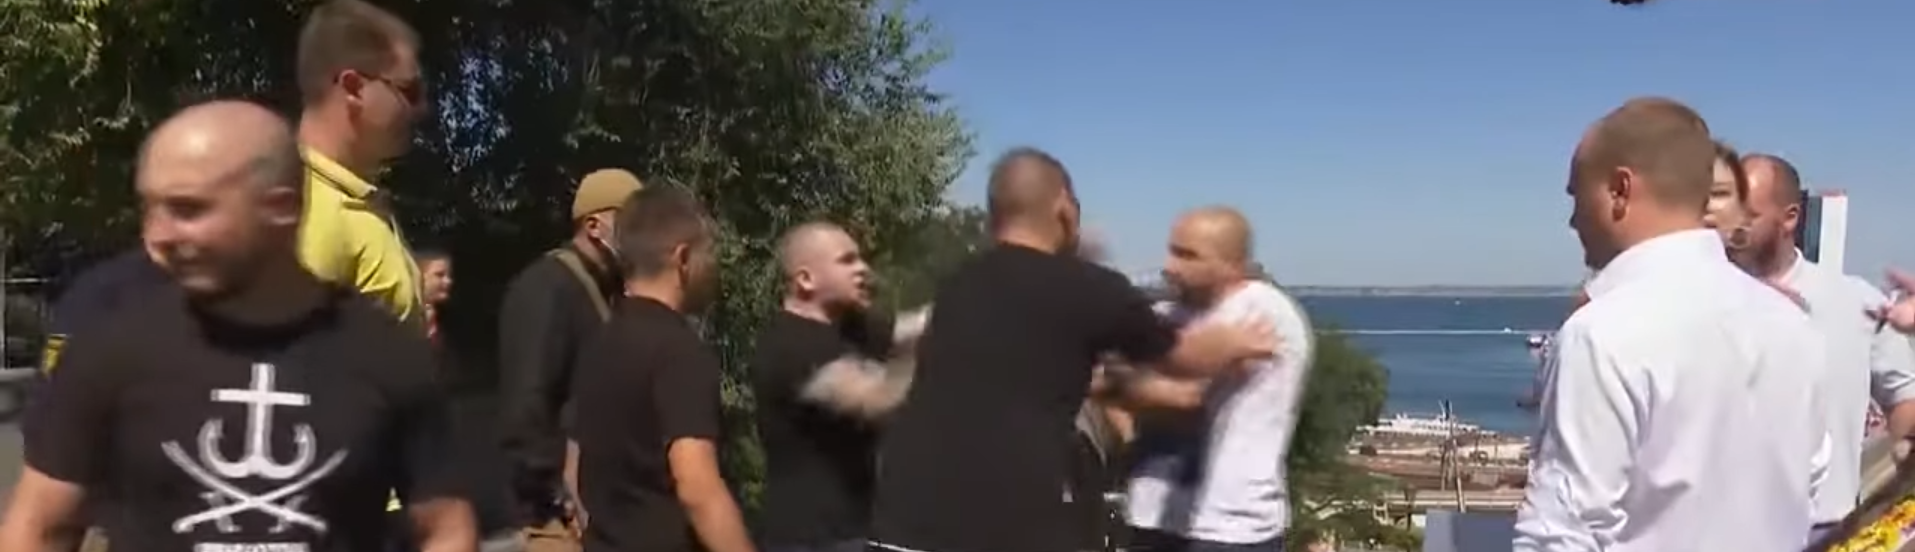 В Одессе напали на депутатов "ОПЗЖ" и журналистов телеканала ZIK: инцидент попал на видео